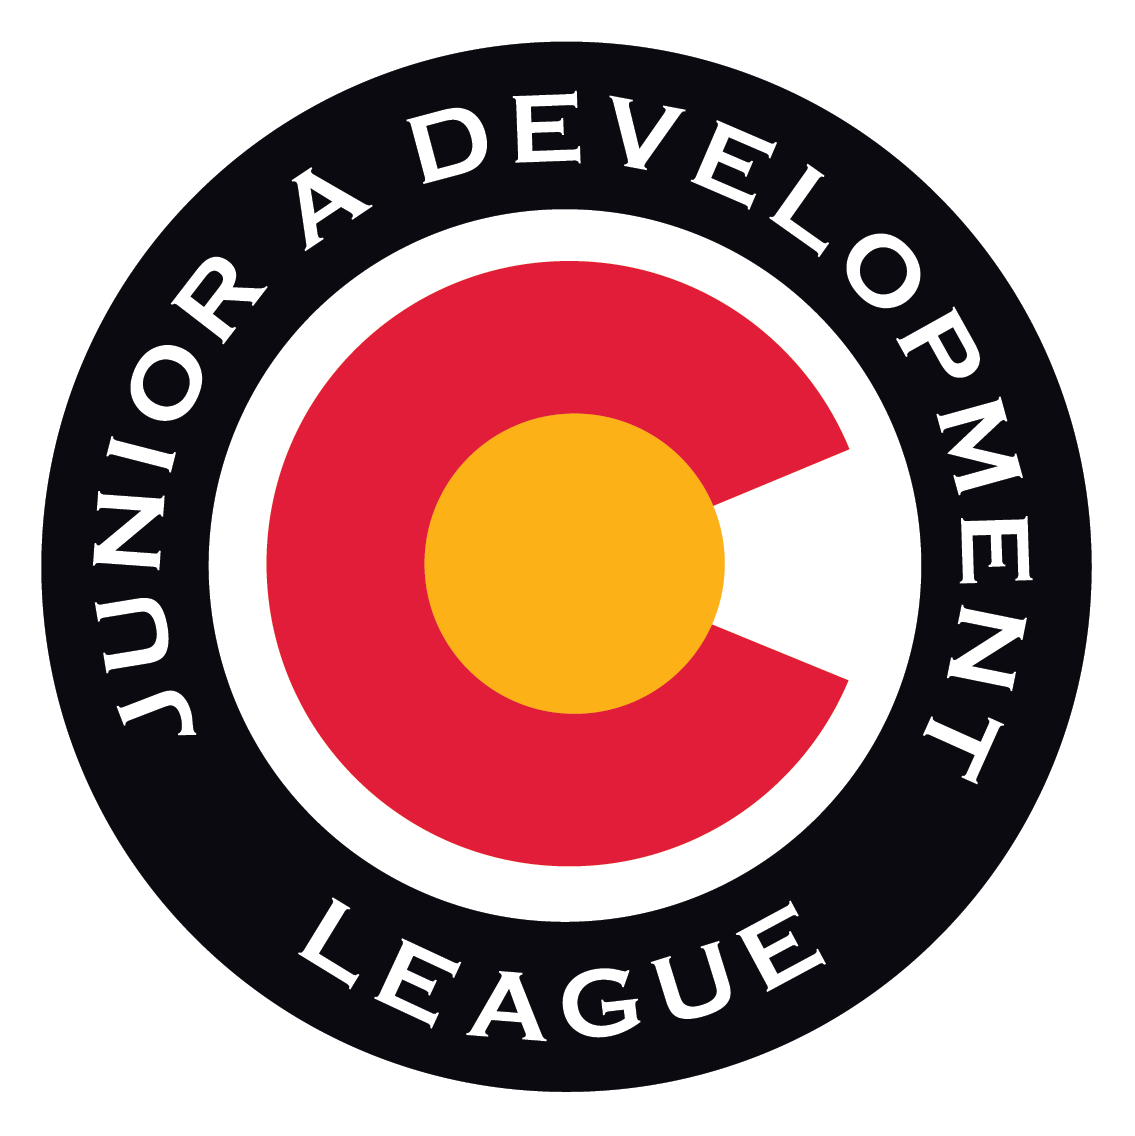 Colorado Jr. A Development League